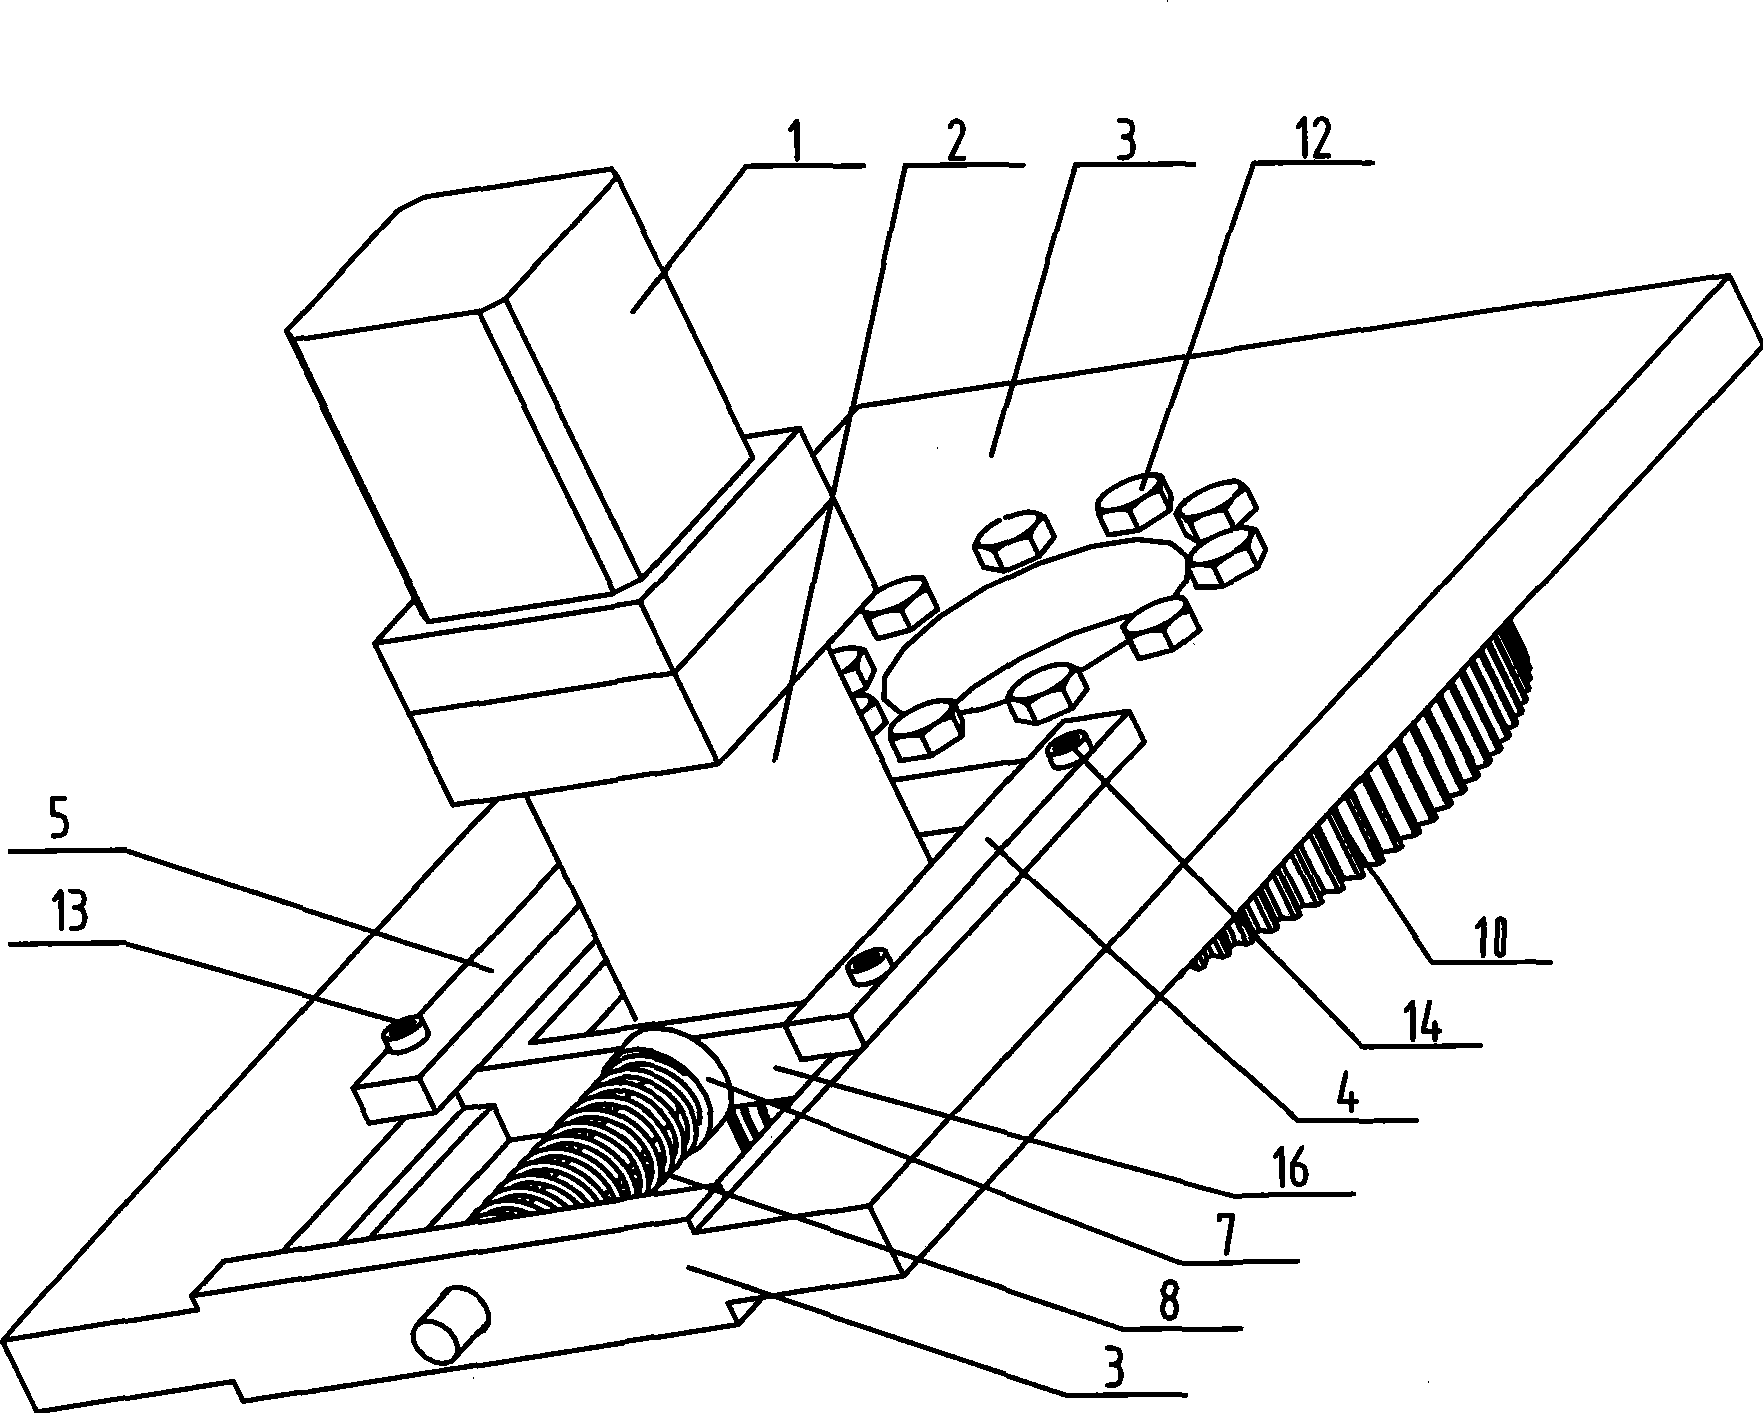 Sliding frame mechanism capable of reducing transmission idling of gears